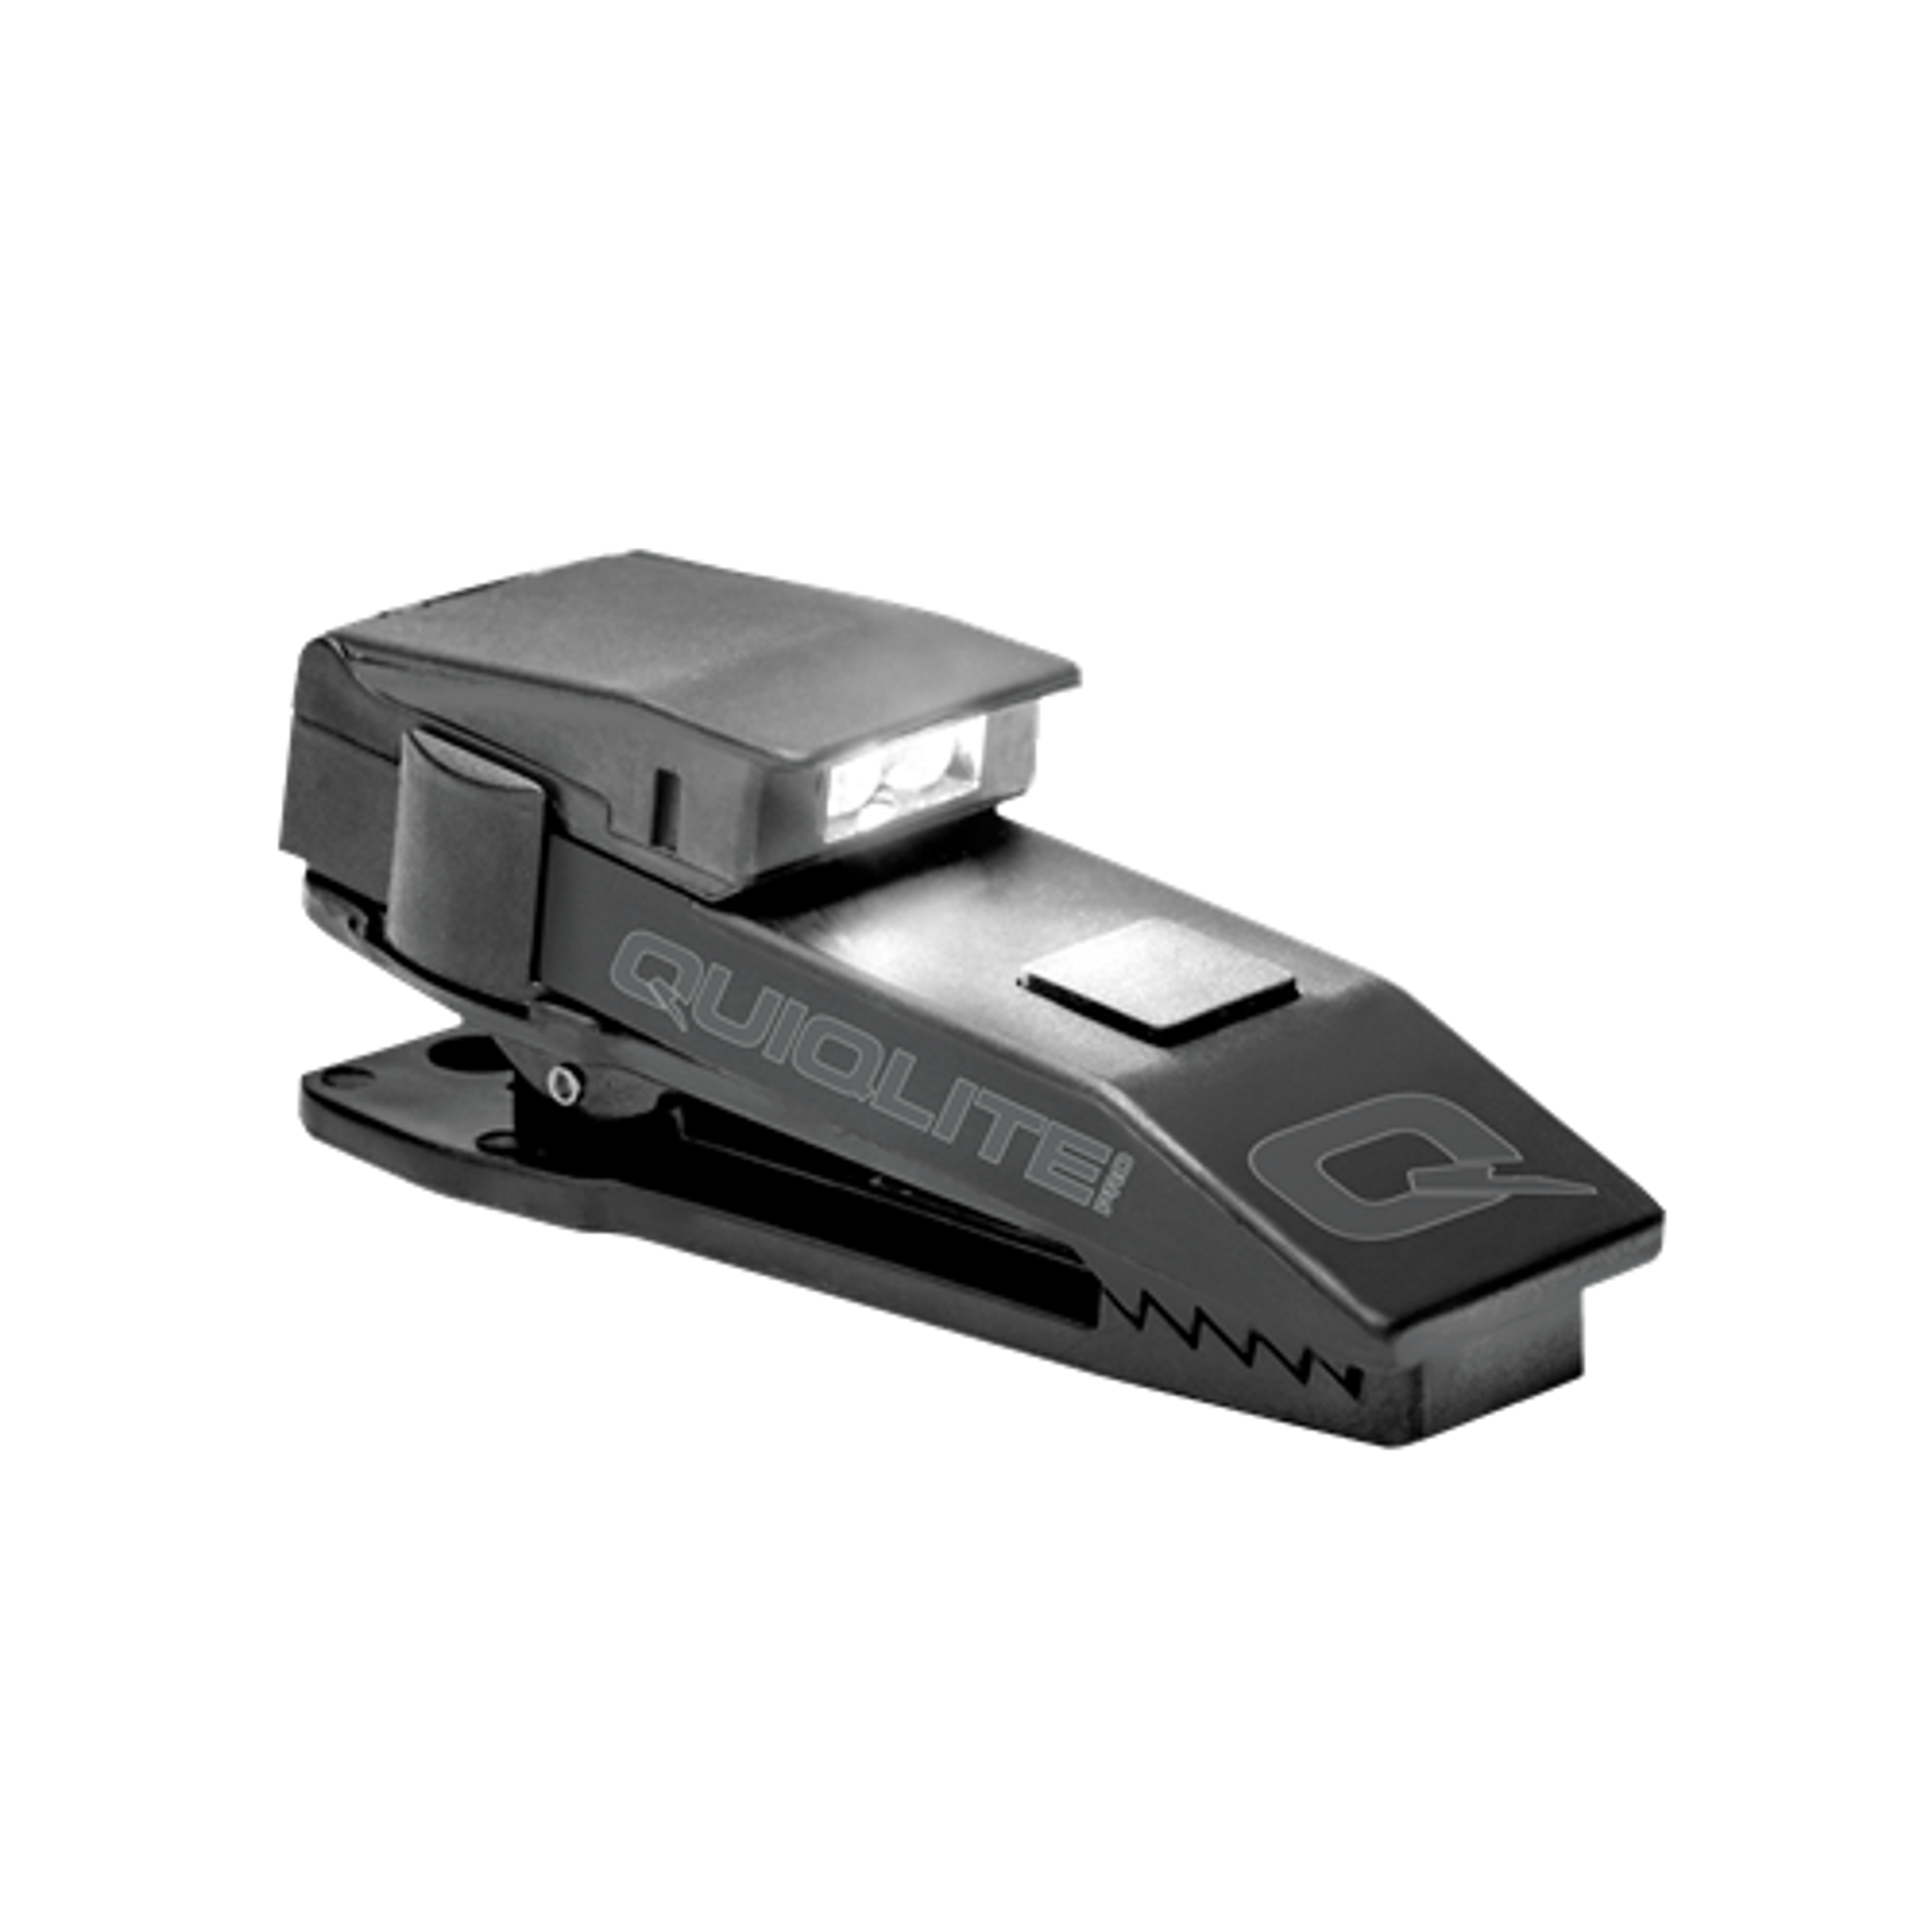 Quiqlitepro Hands Free Pocket Concealable Flashlight 10 - 20 Lumens - KRQL-Q-PROWW